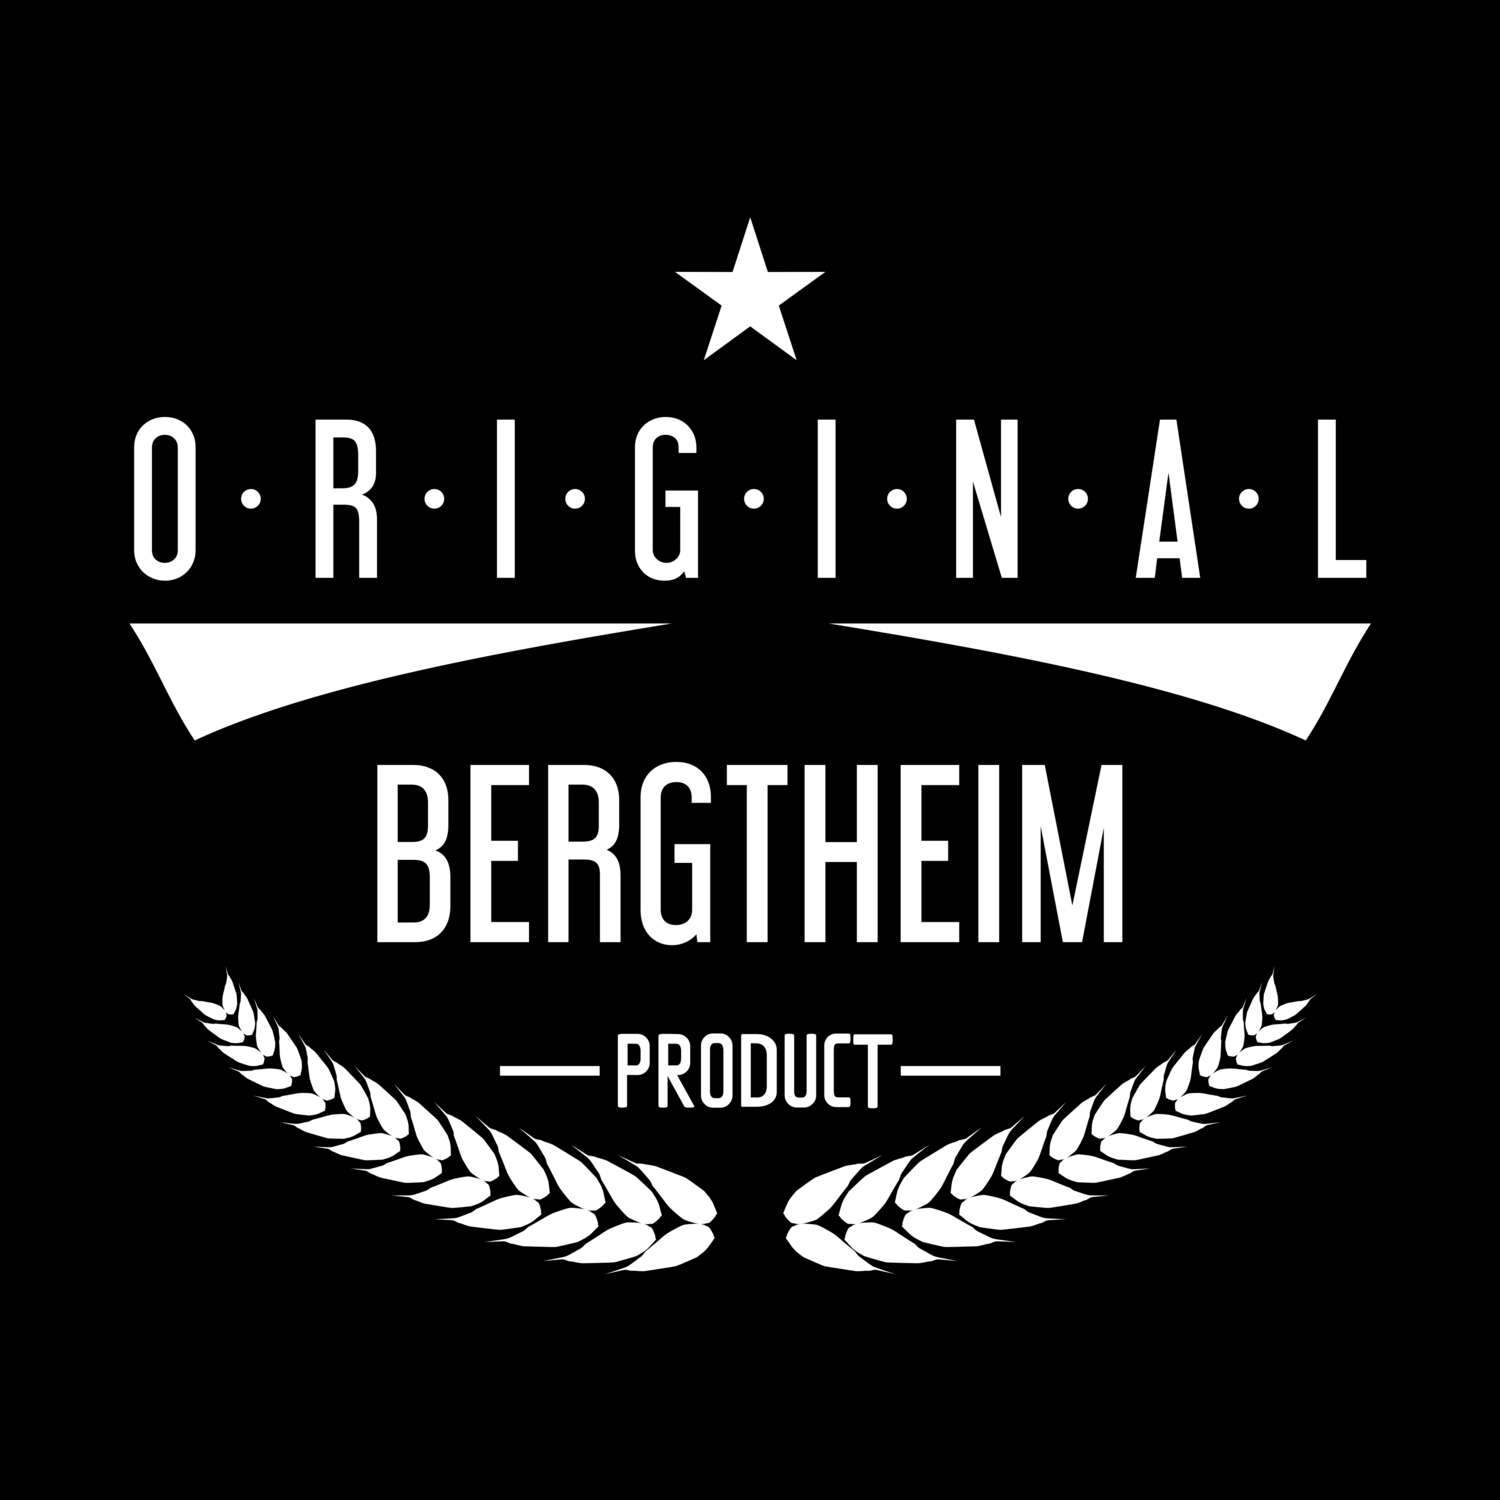 Bergtheim T-Shirt »Original Product«